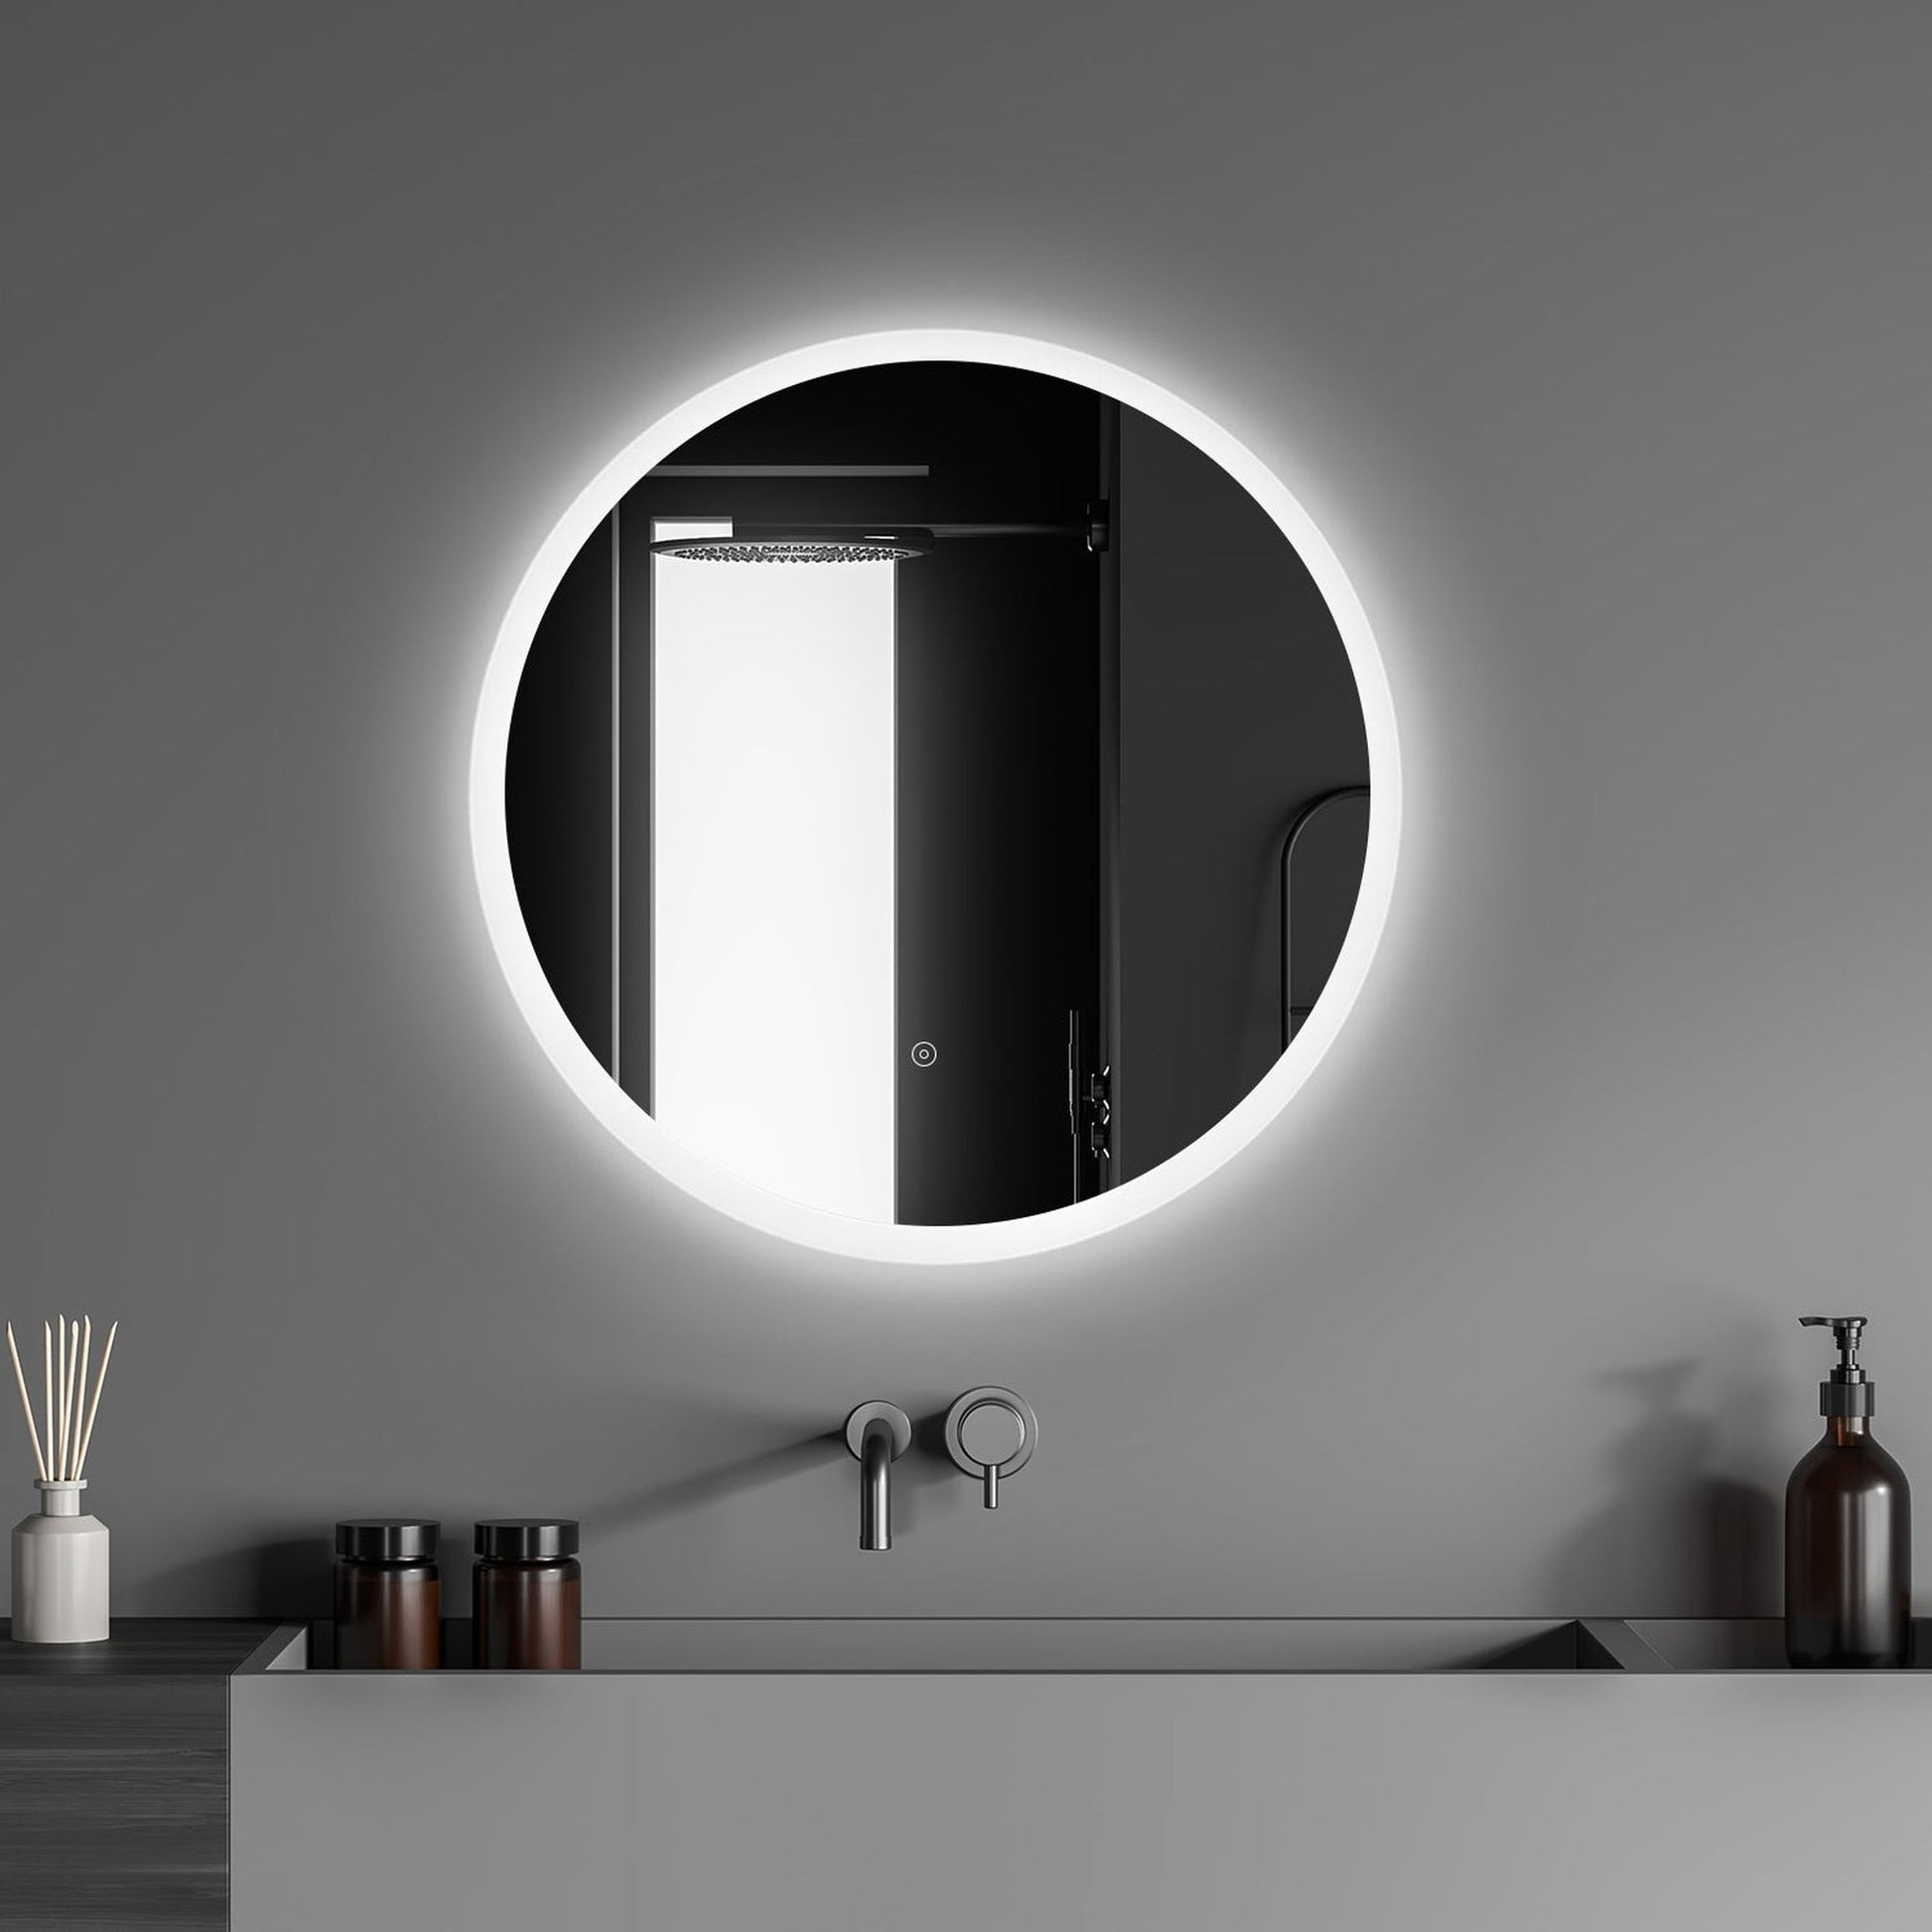 Altair Dimora 24" Round Wall-Mounted LED Mirror